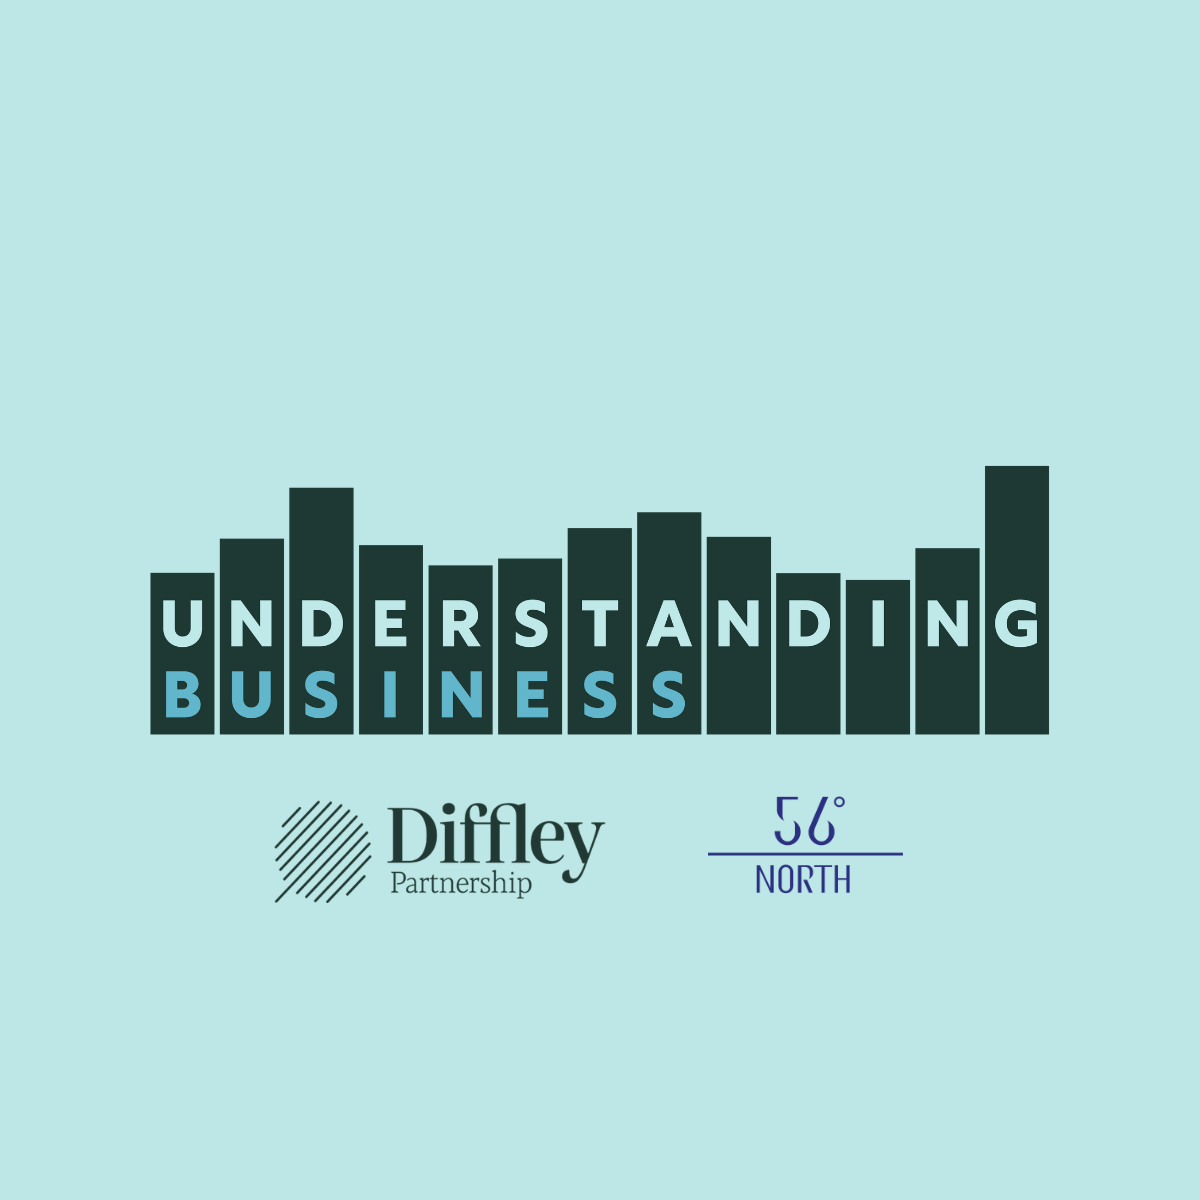 Understanding Business logo on a light blue background.